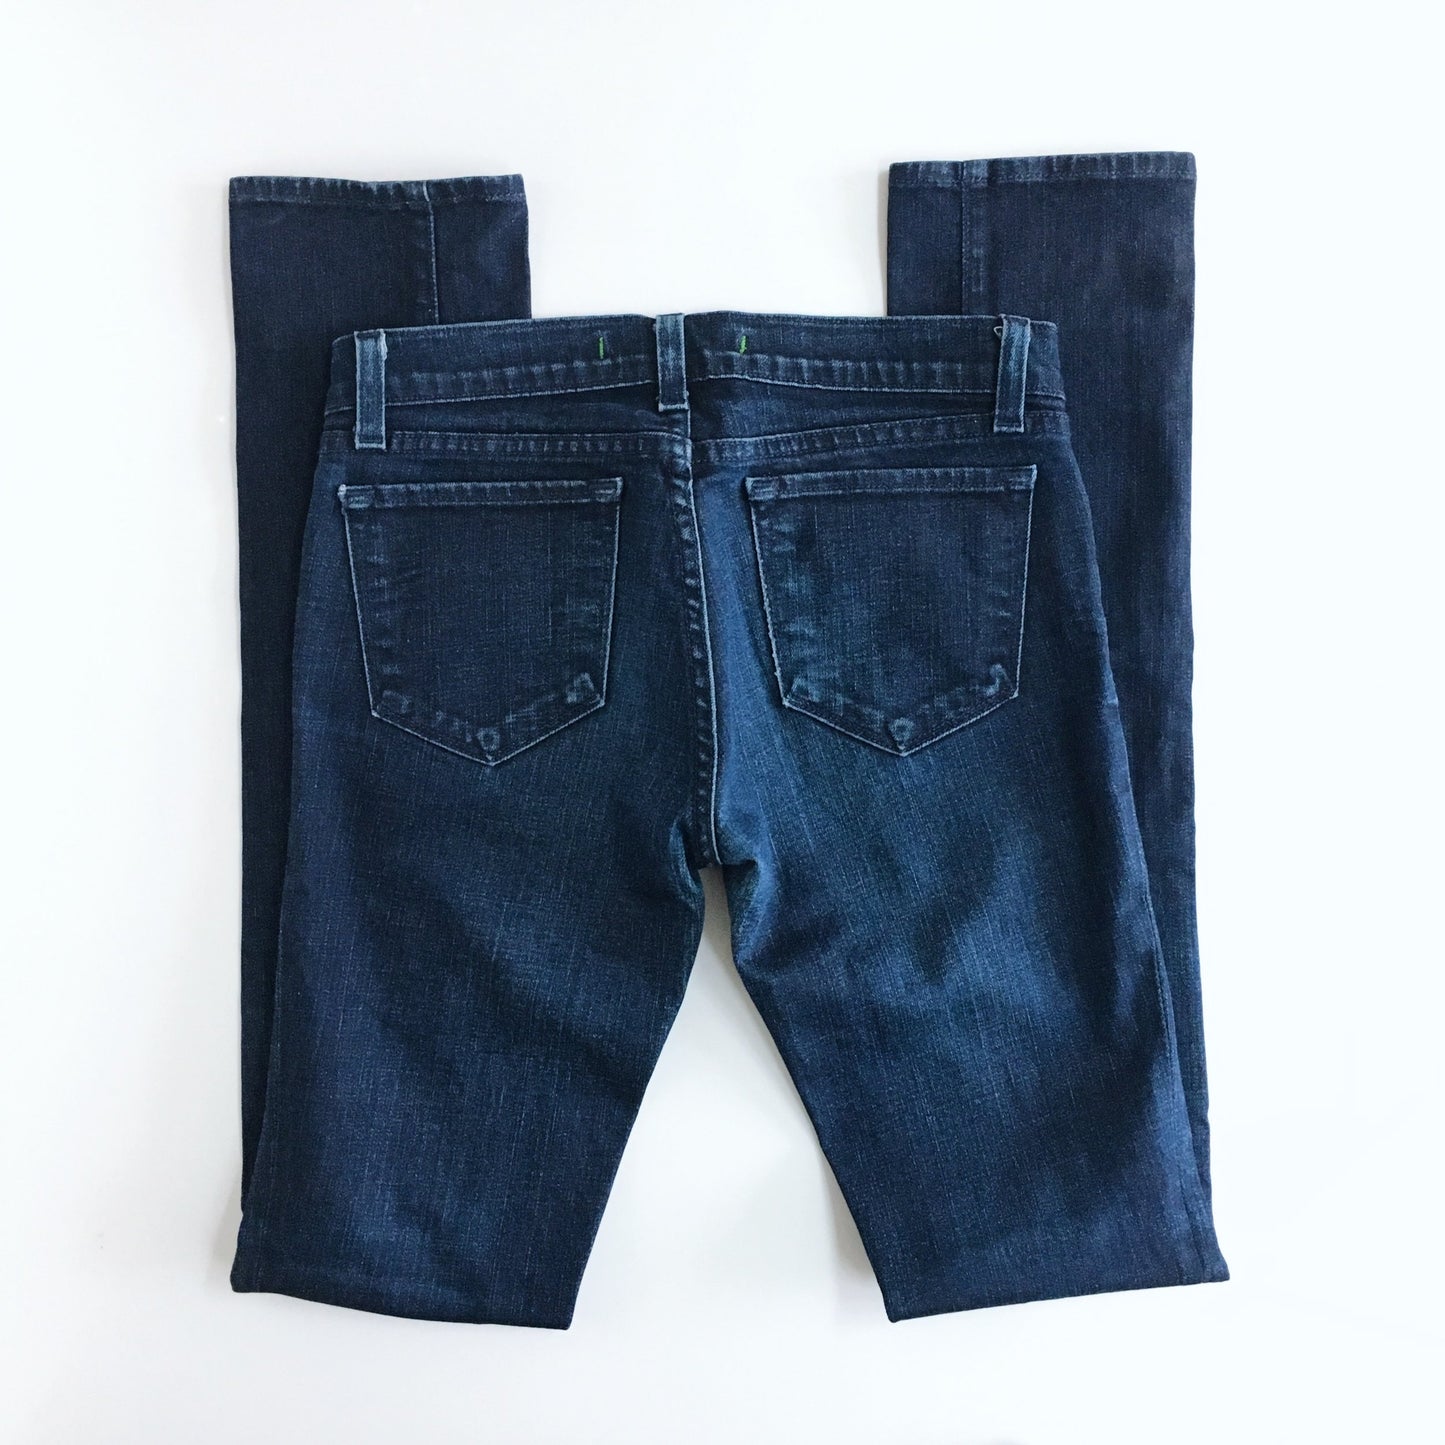 J Brand Pencil Leg Jeans in Dark Vintage - size 26